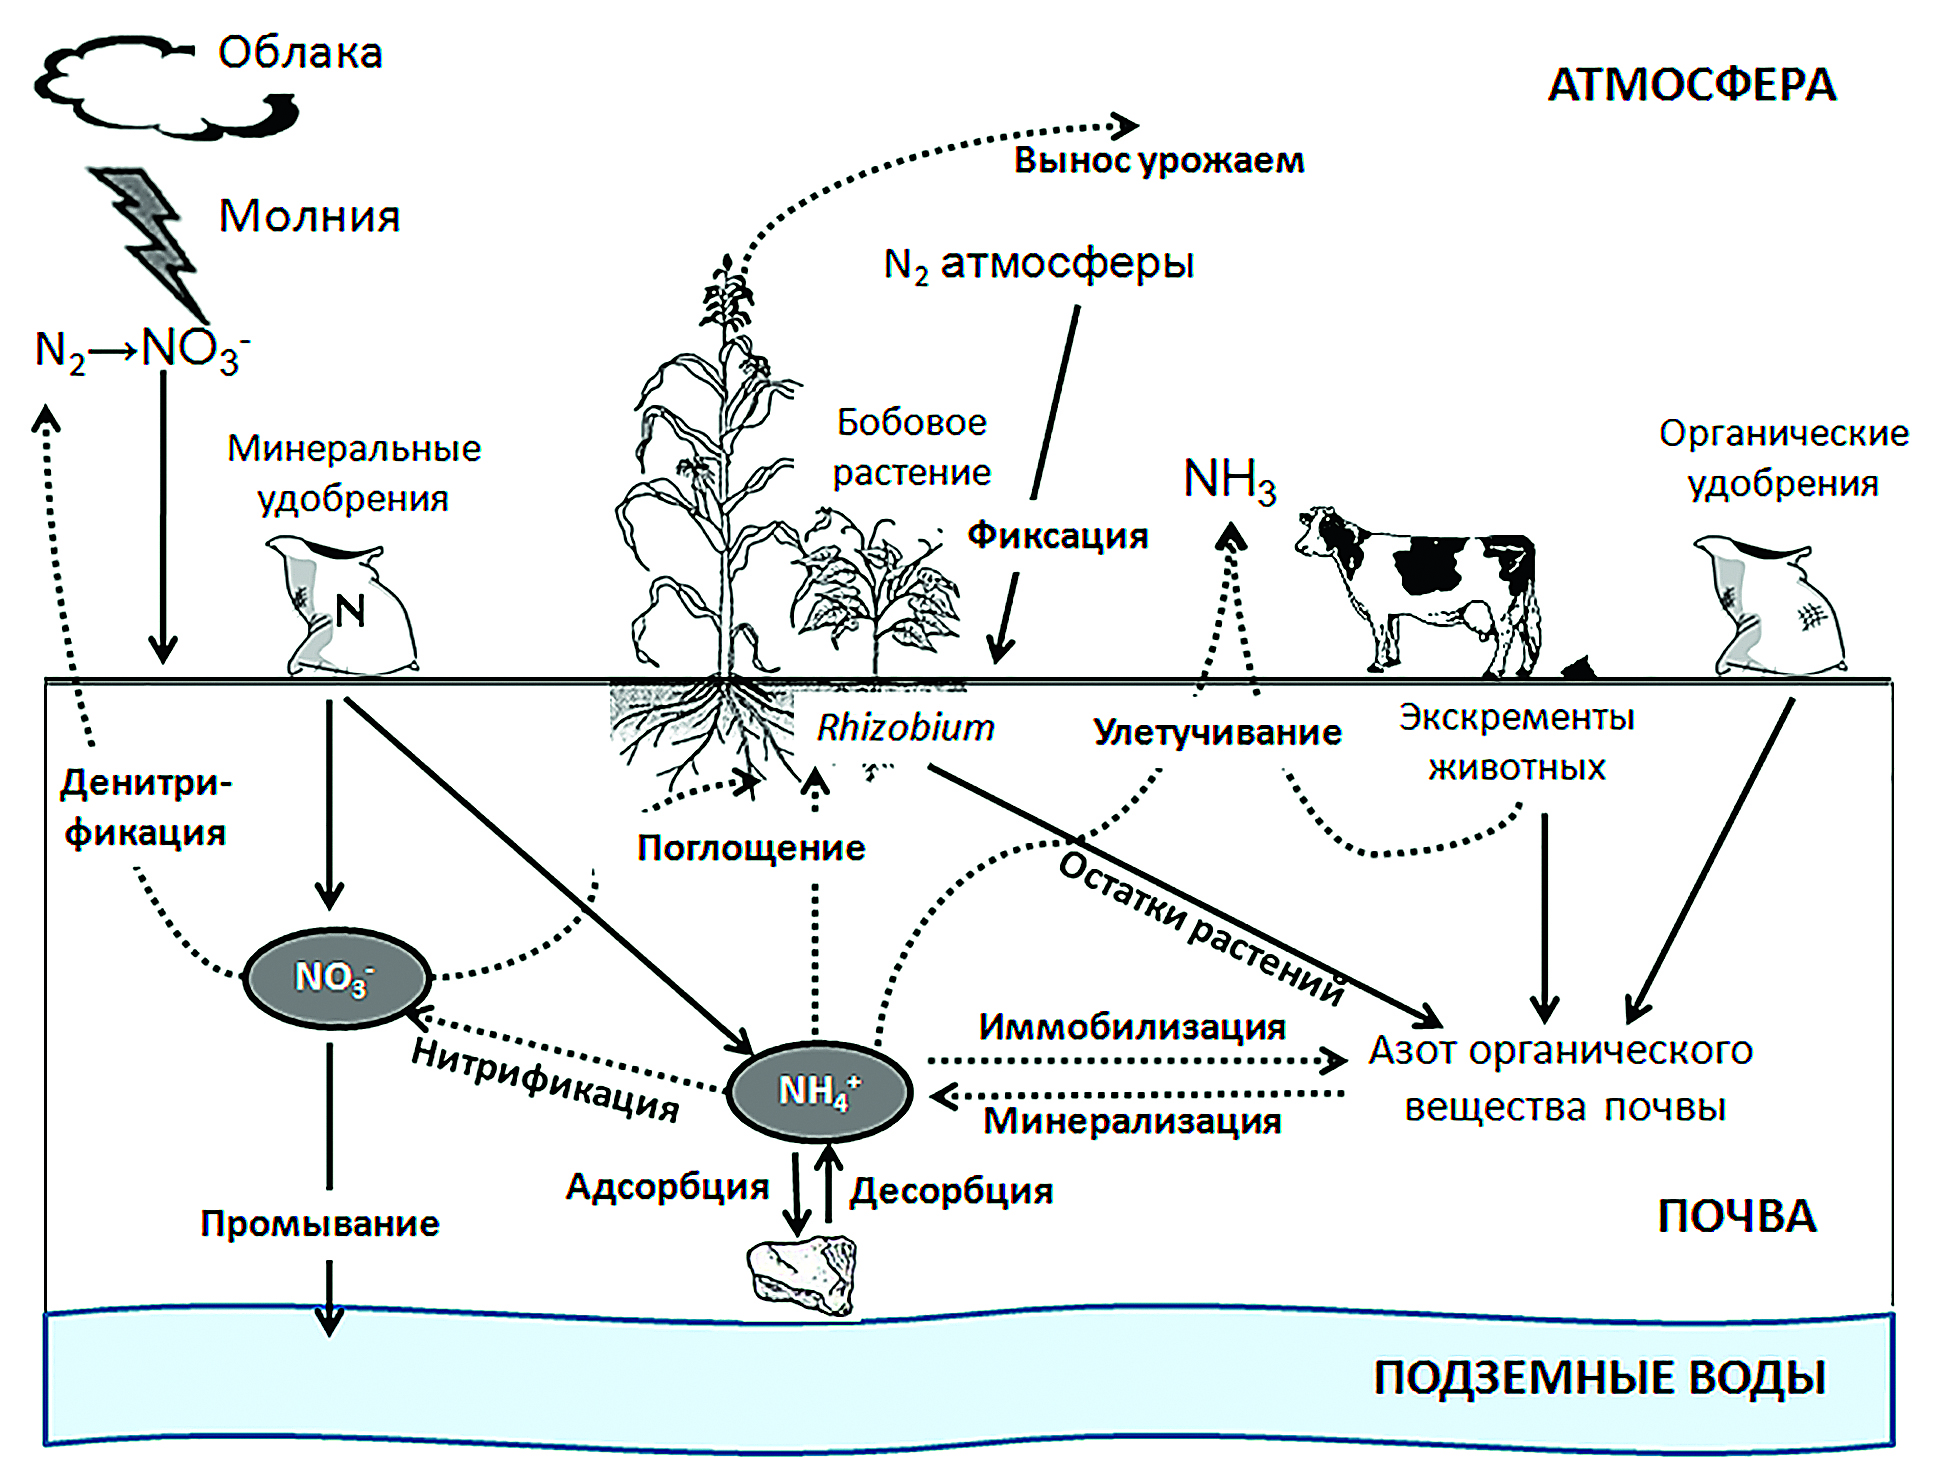 Превращение соединений азота. Схема биологического цикла азота. Круговорот азота в природе. Круговорот азота алгоритм. Круговорот веществ азота схема.